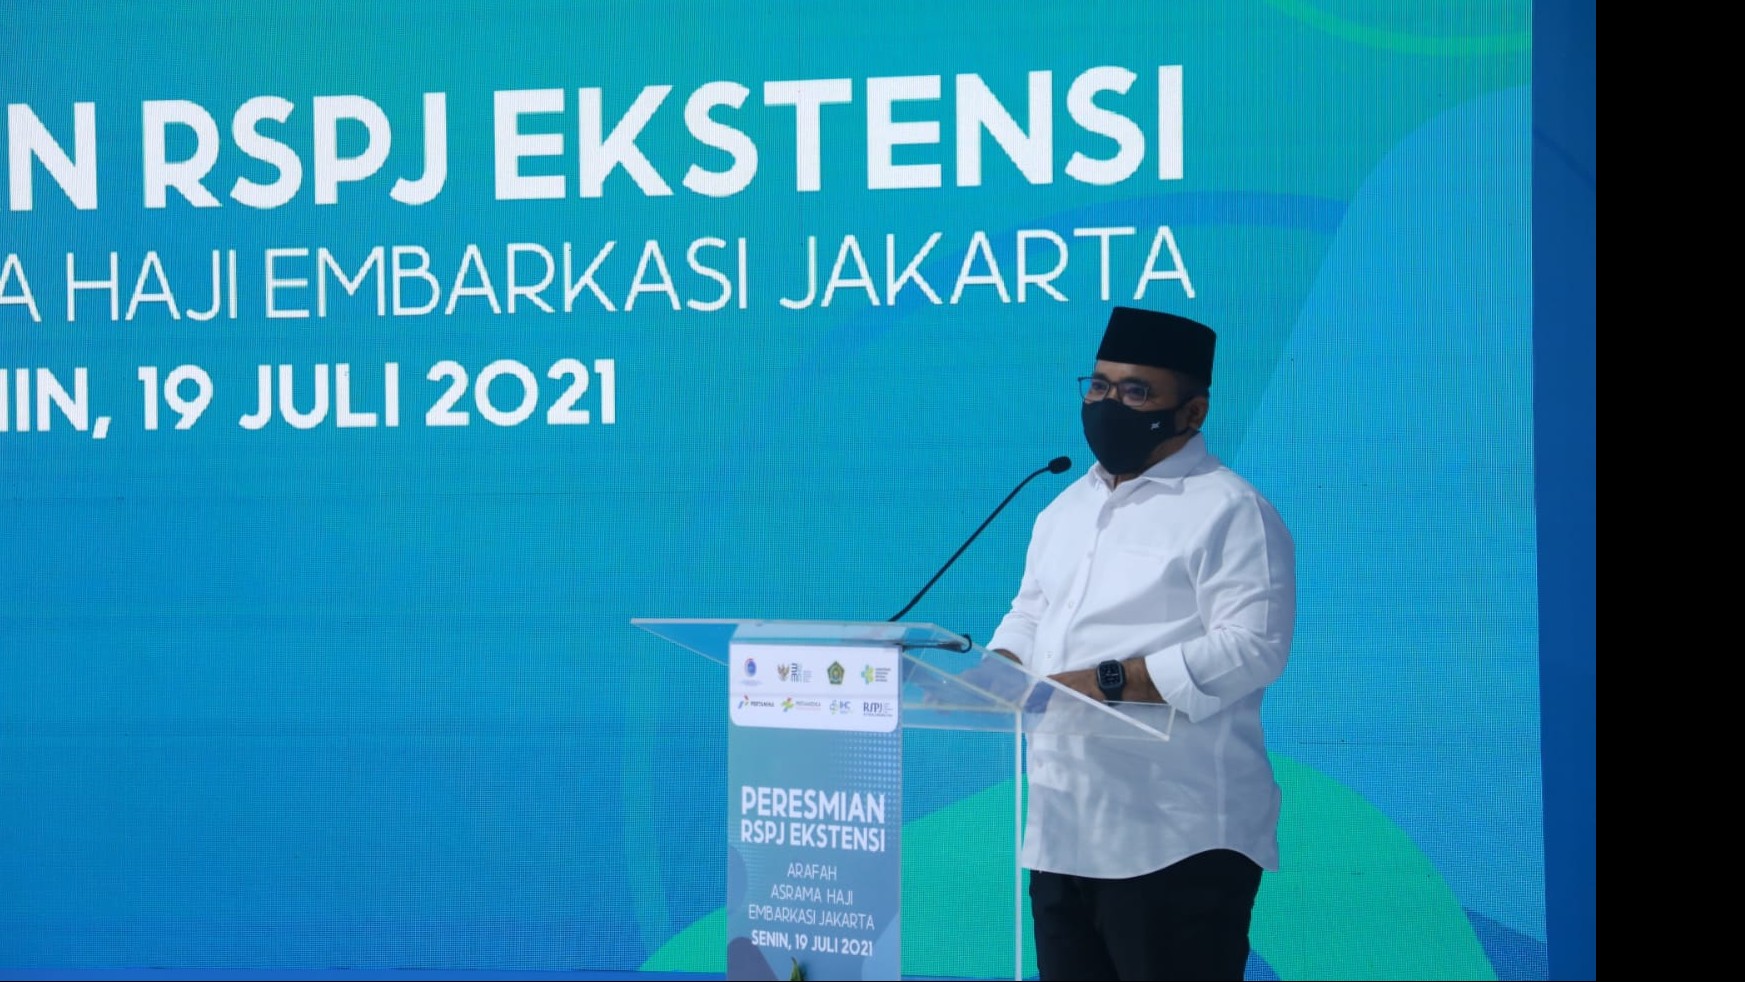 Menteri Agama Menyampaikan Sambutan Pada Peresmian RSPJ Ekstensi Arafah Asrama Haji Jakarta